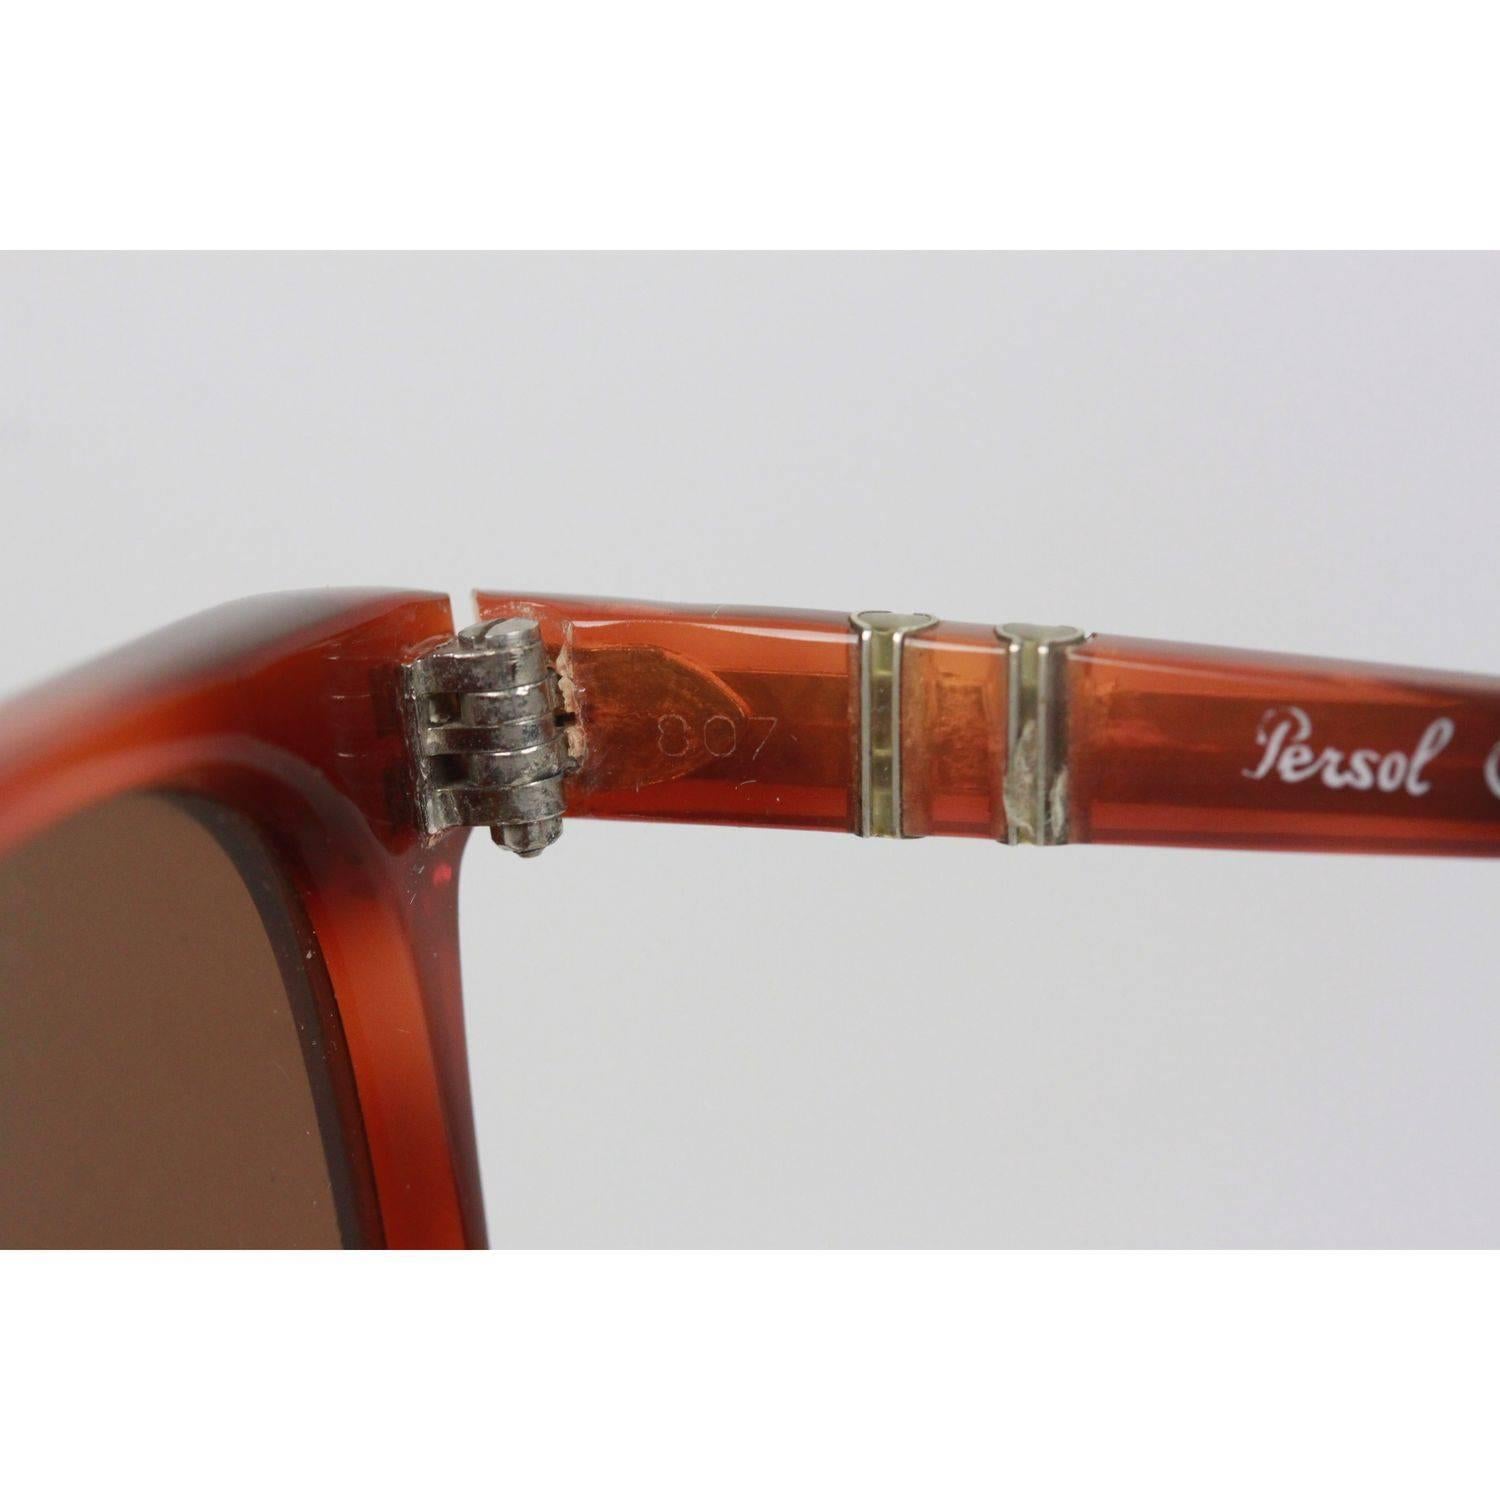 PERSOL Meflecto RATTI Vintage Folding 807 Legend Sunglasses 130mm NOS 2